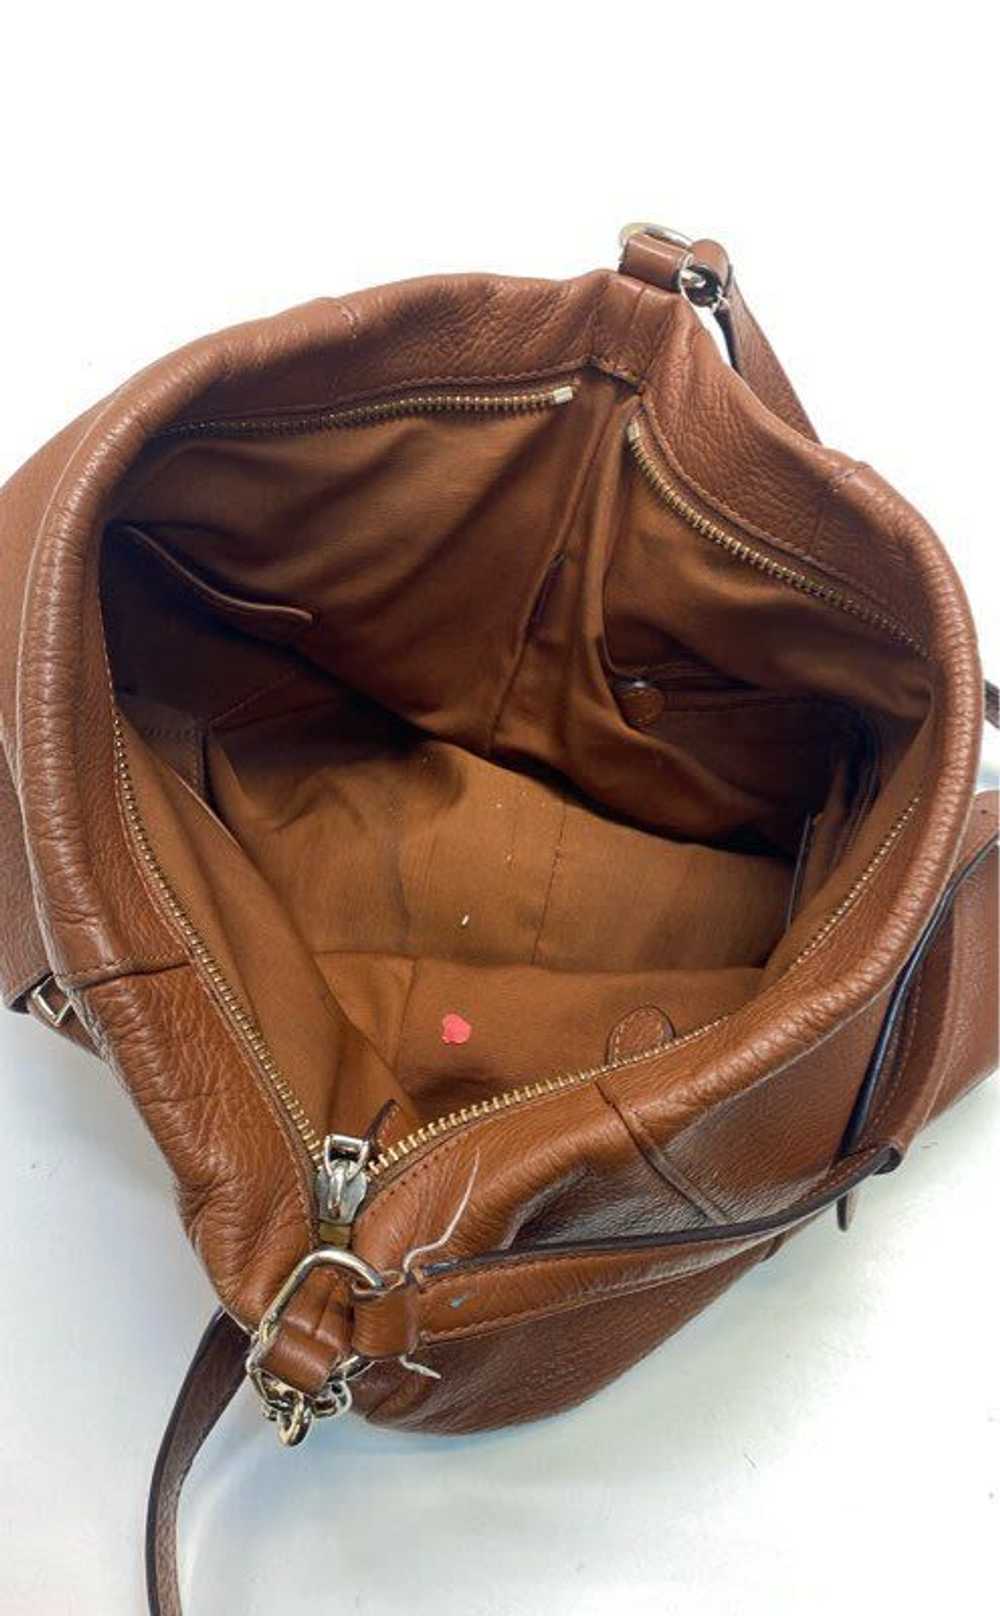 Coach Pebble Leather Isabelle Shoulder Bag Tan - image 3